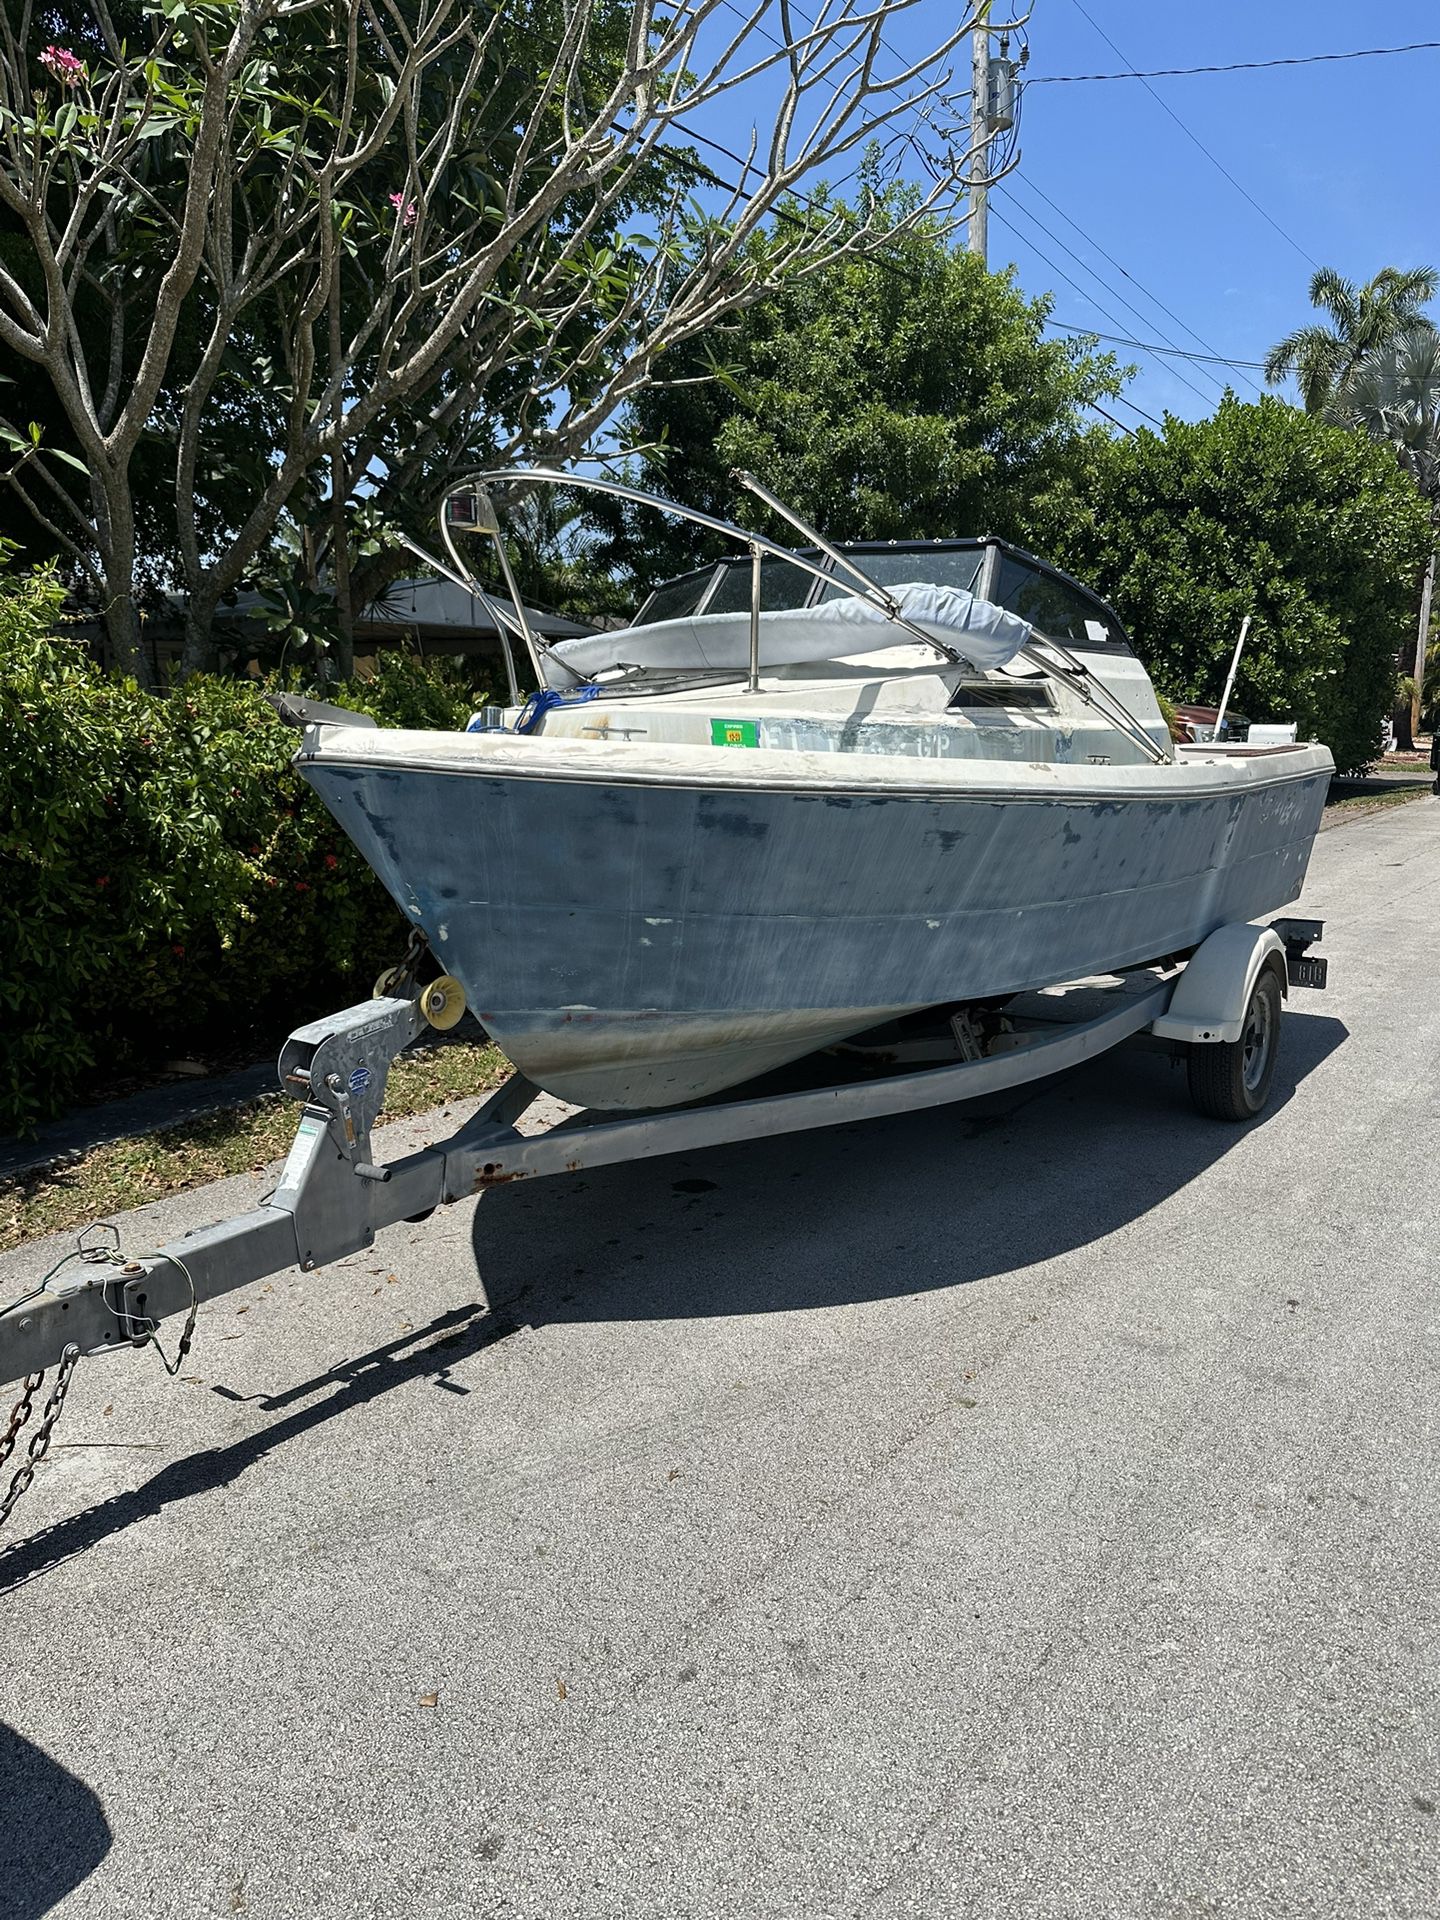 Boat Arima Seachaser 19.5